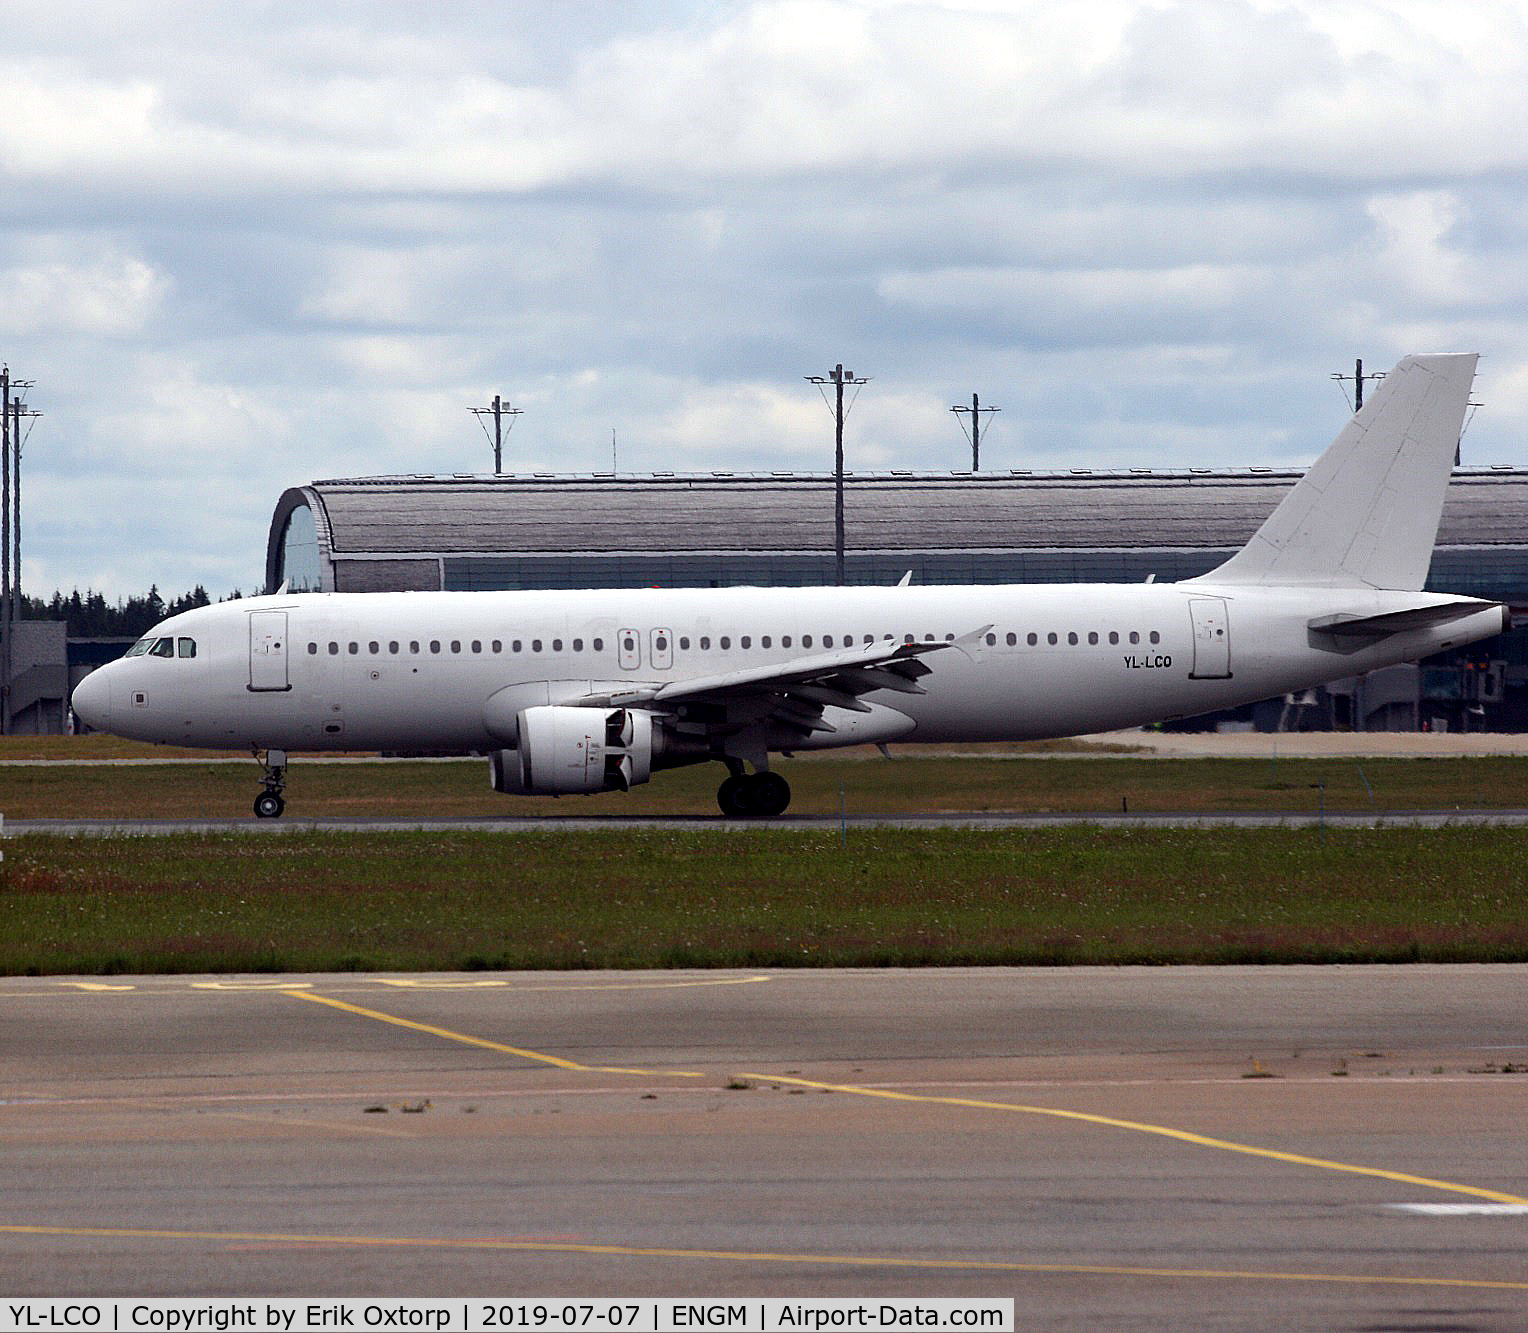 YL-LCO, 2002 Airbus A320-214 C/N 1873, YL-LCO landed rw 01L